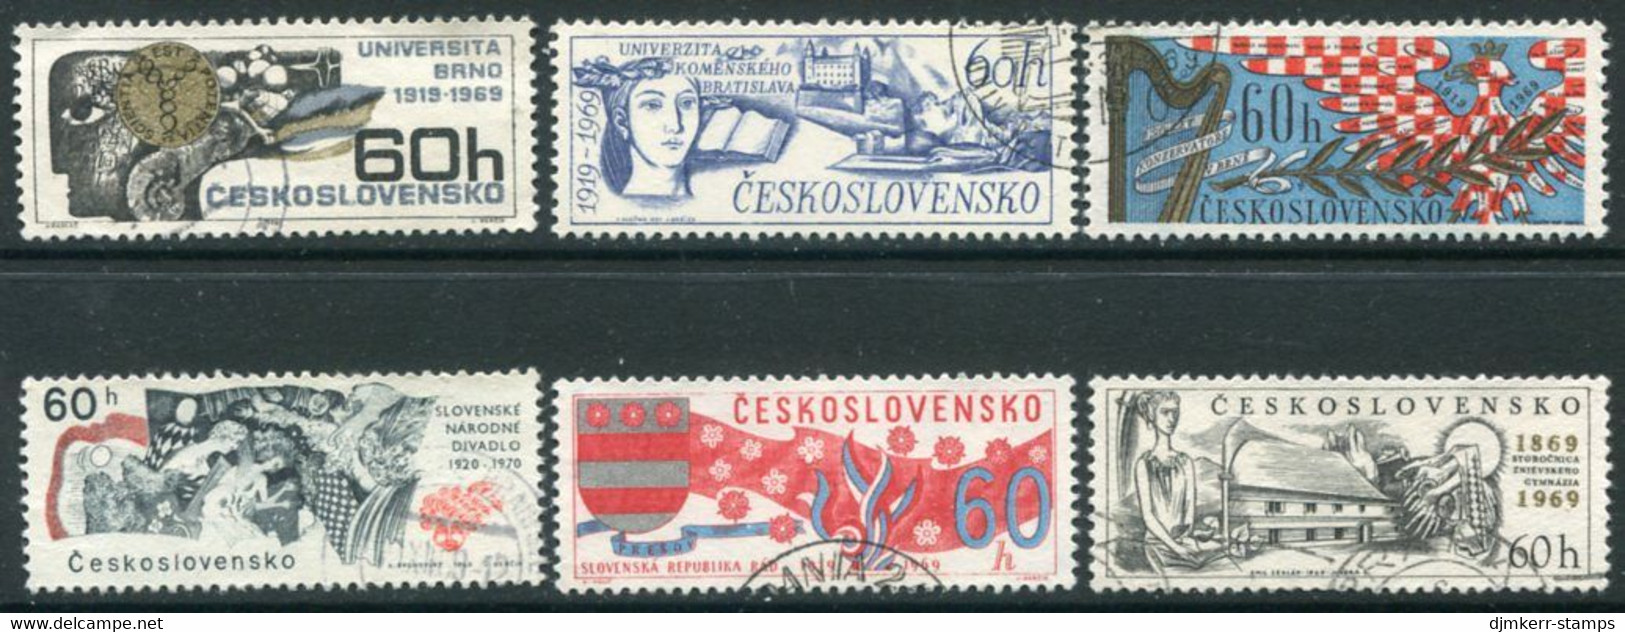 CZECHOSLOVAKIA 1969 Scientific And Cultural Anniversaries Used  Michel 1860-65 - Oblitérés